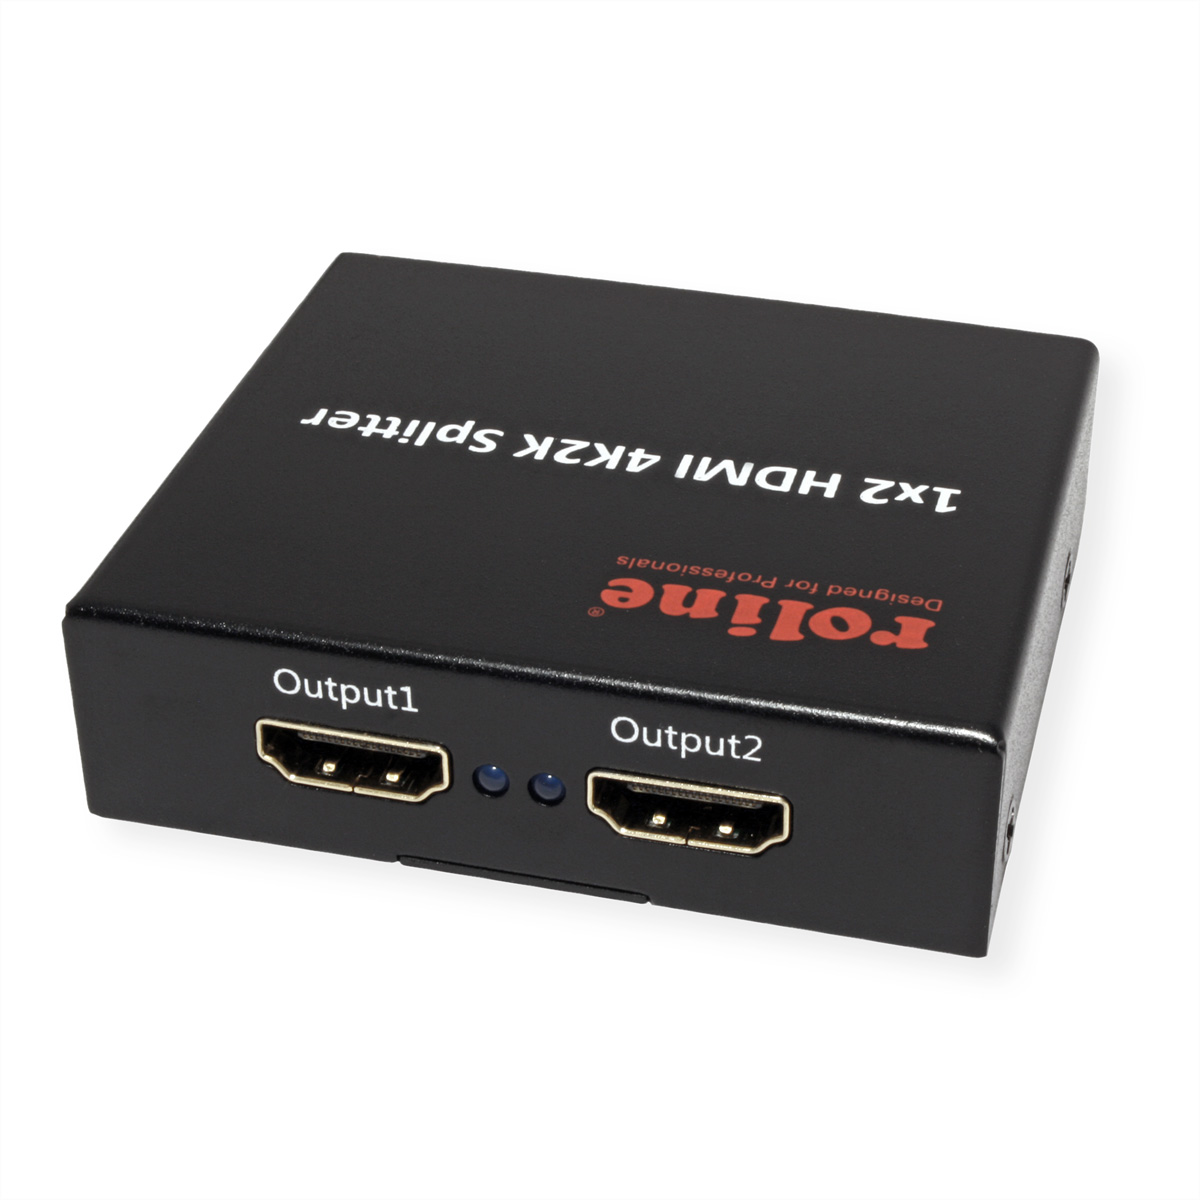 ROLINE HDMI 2fach HDMI-Video-Splitter Video-Splitter